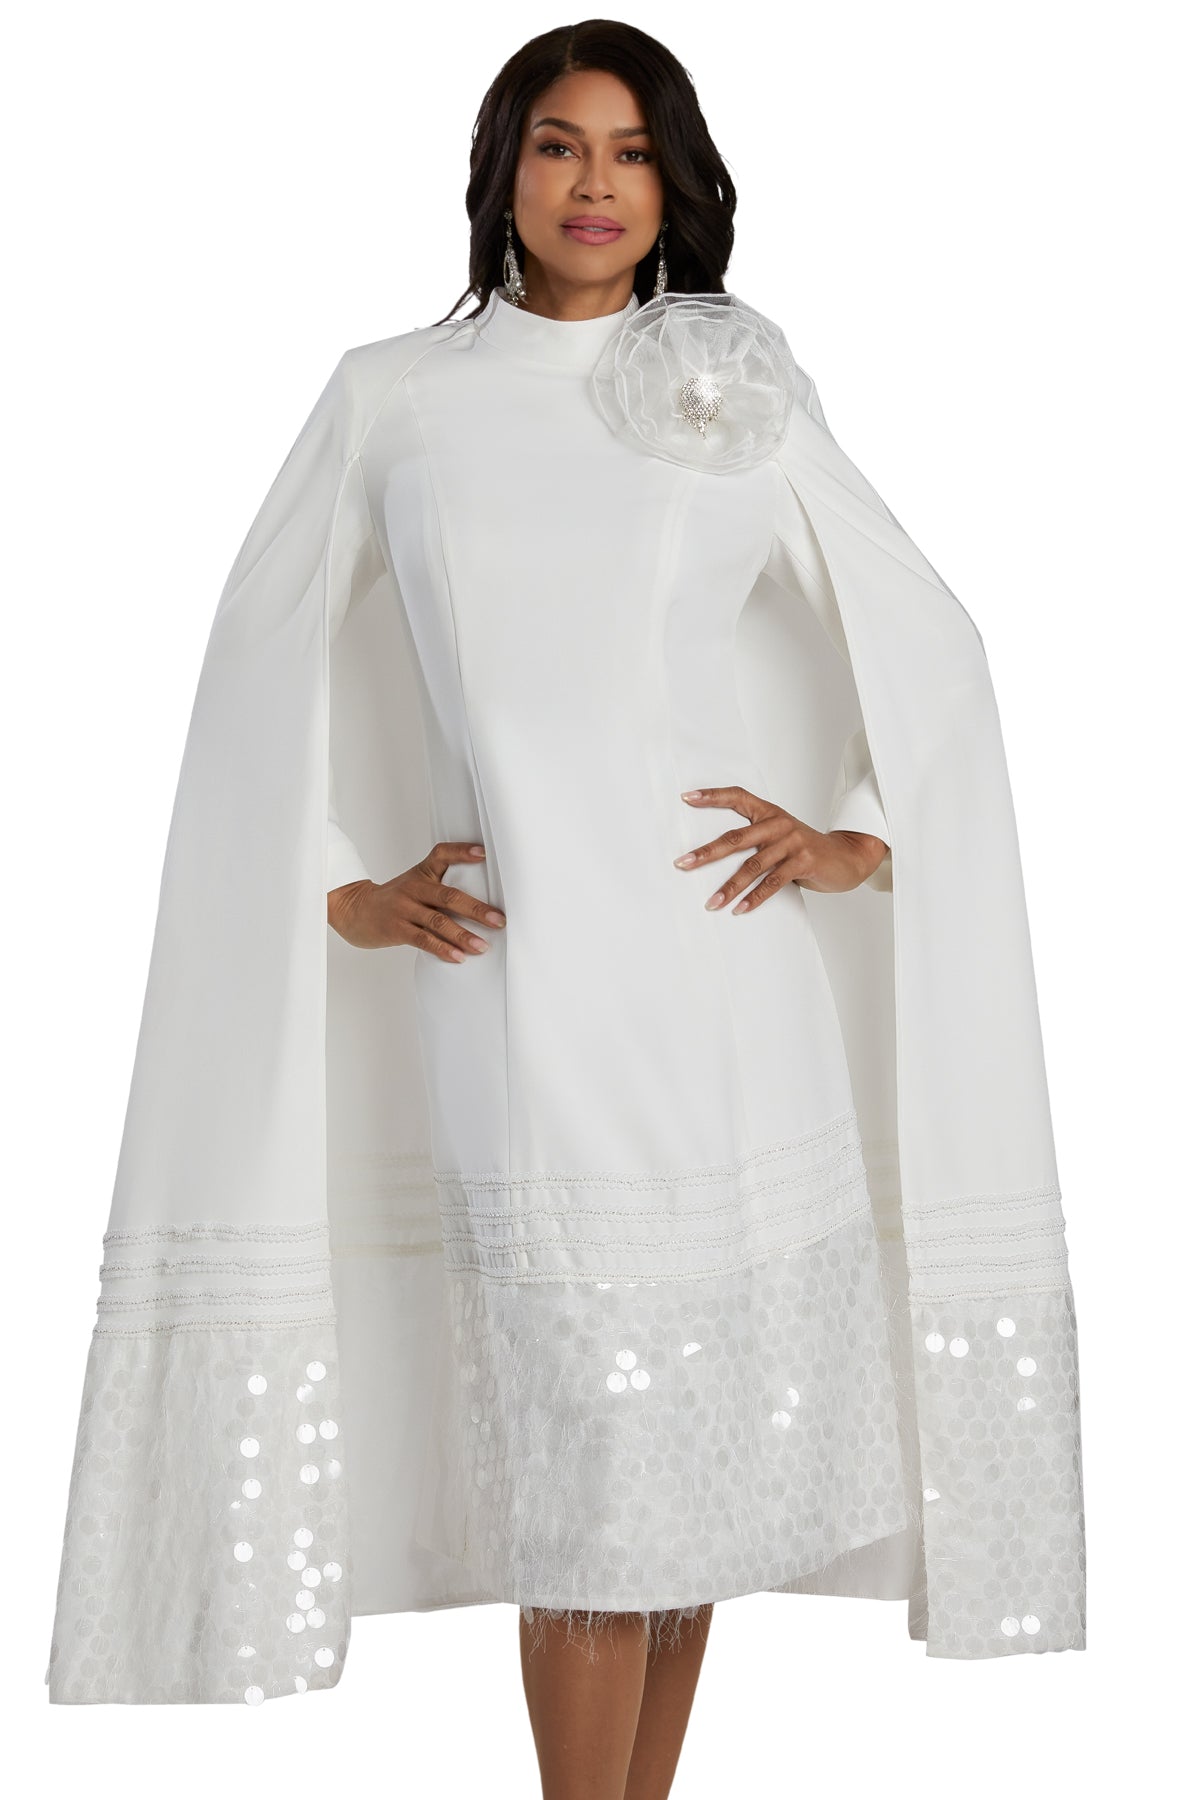 Donna Vinci dresses, church dress, church suit, all white dress